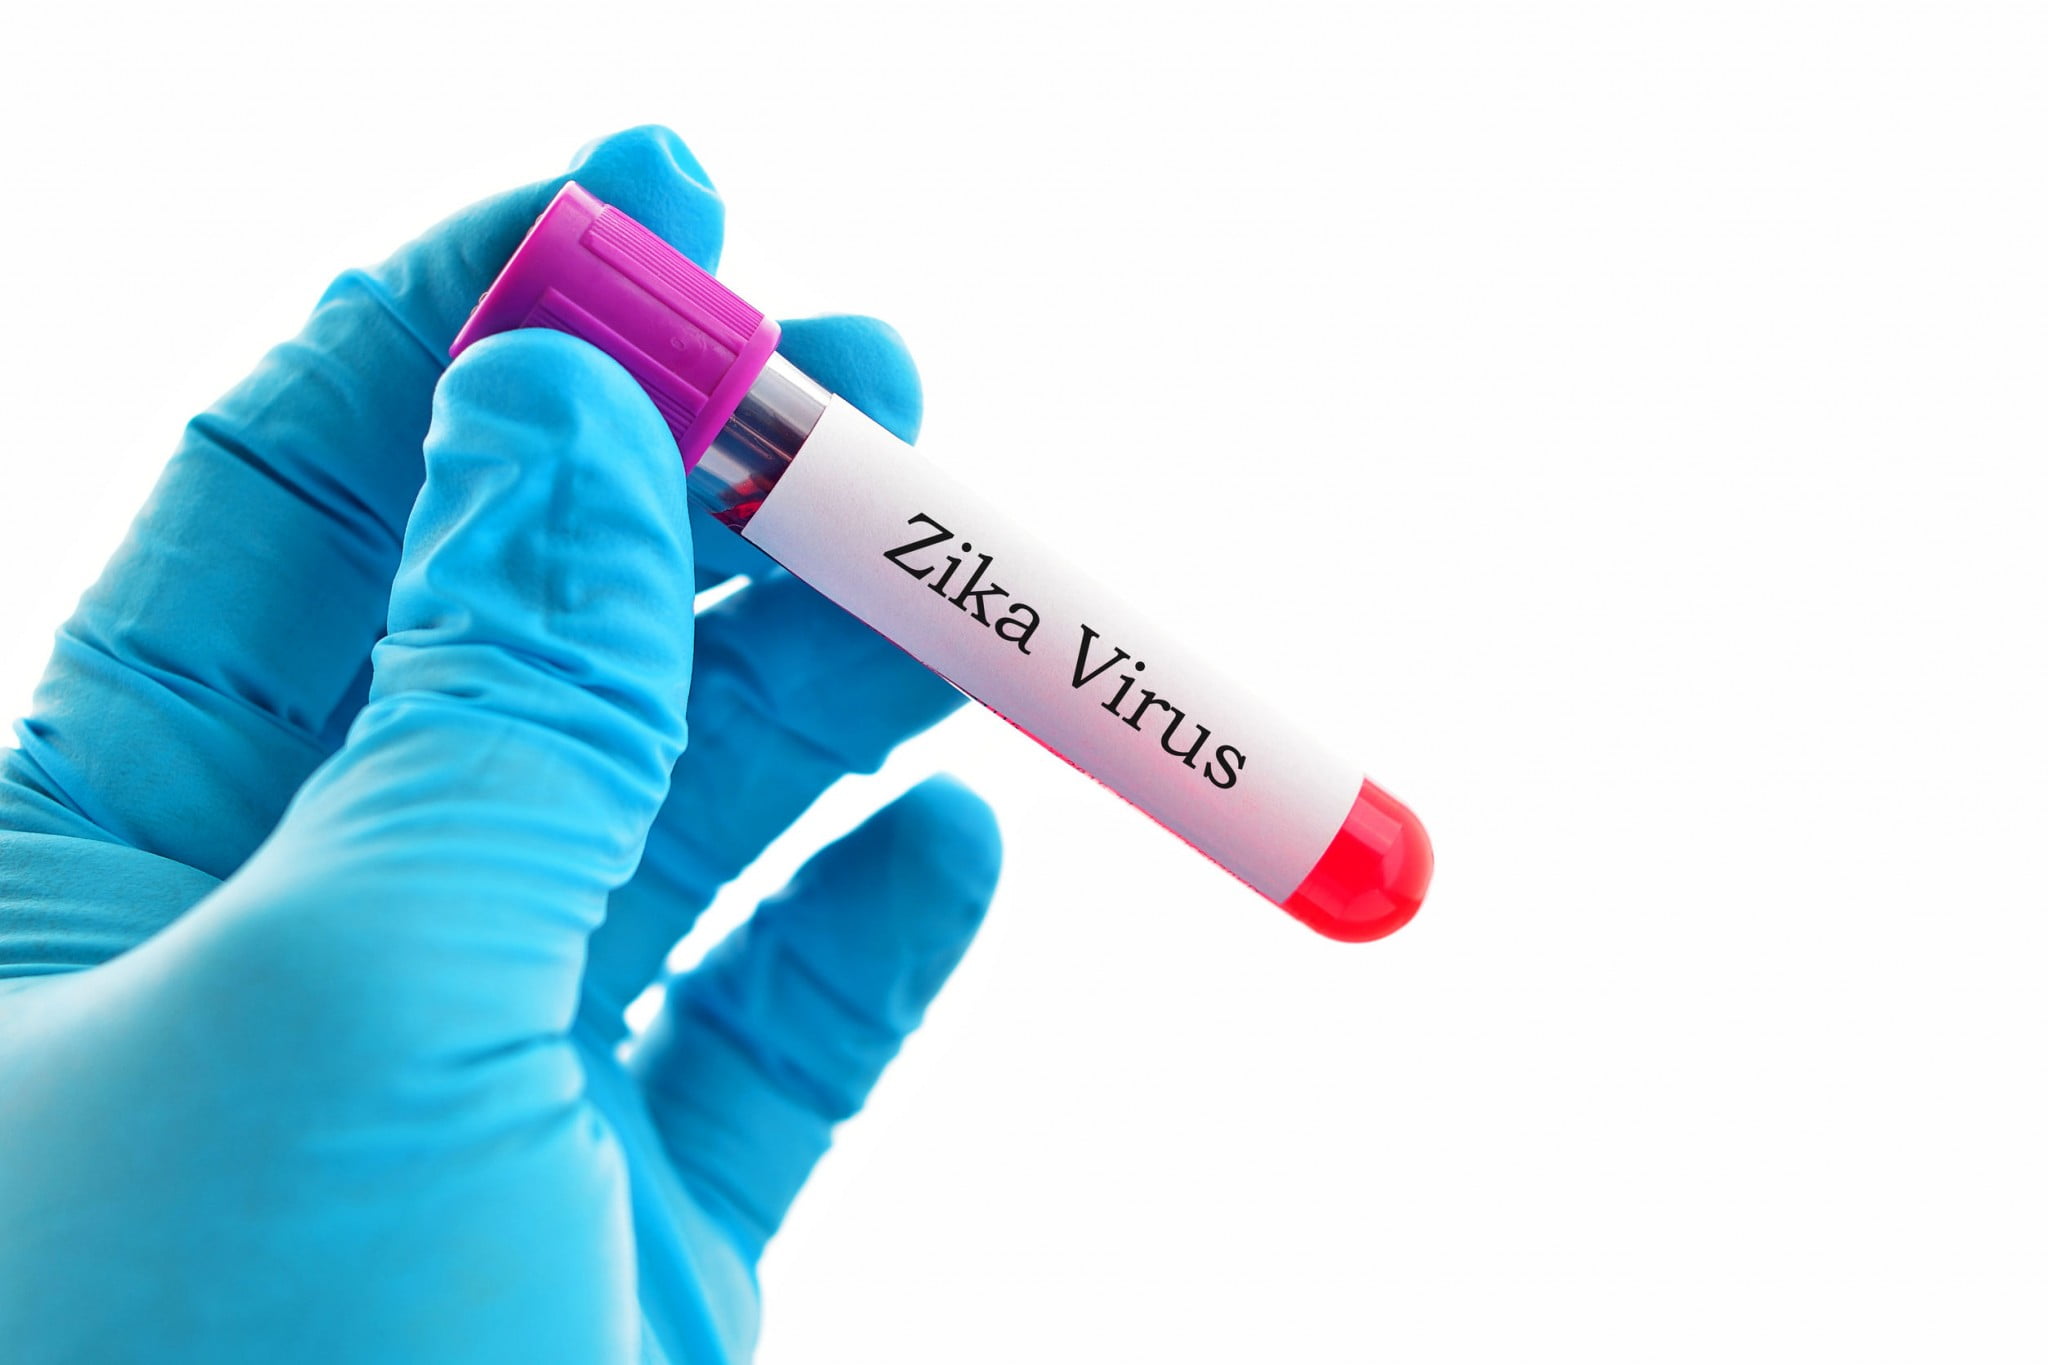 vial says "zika"